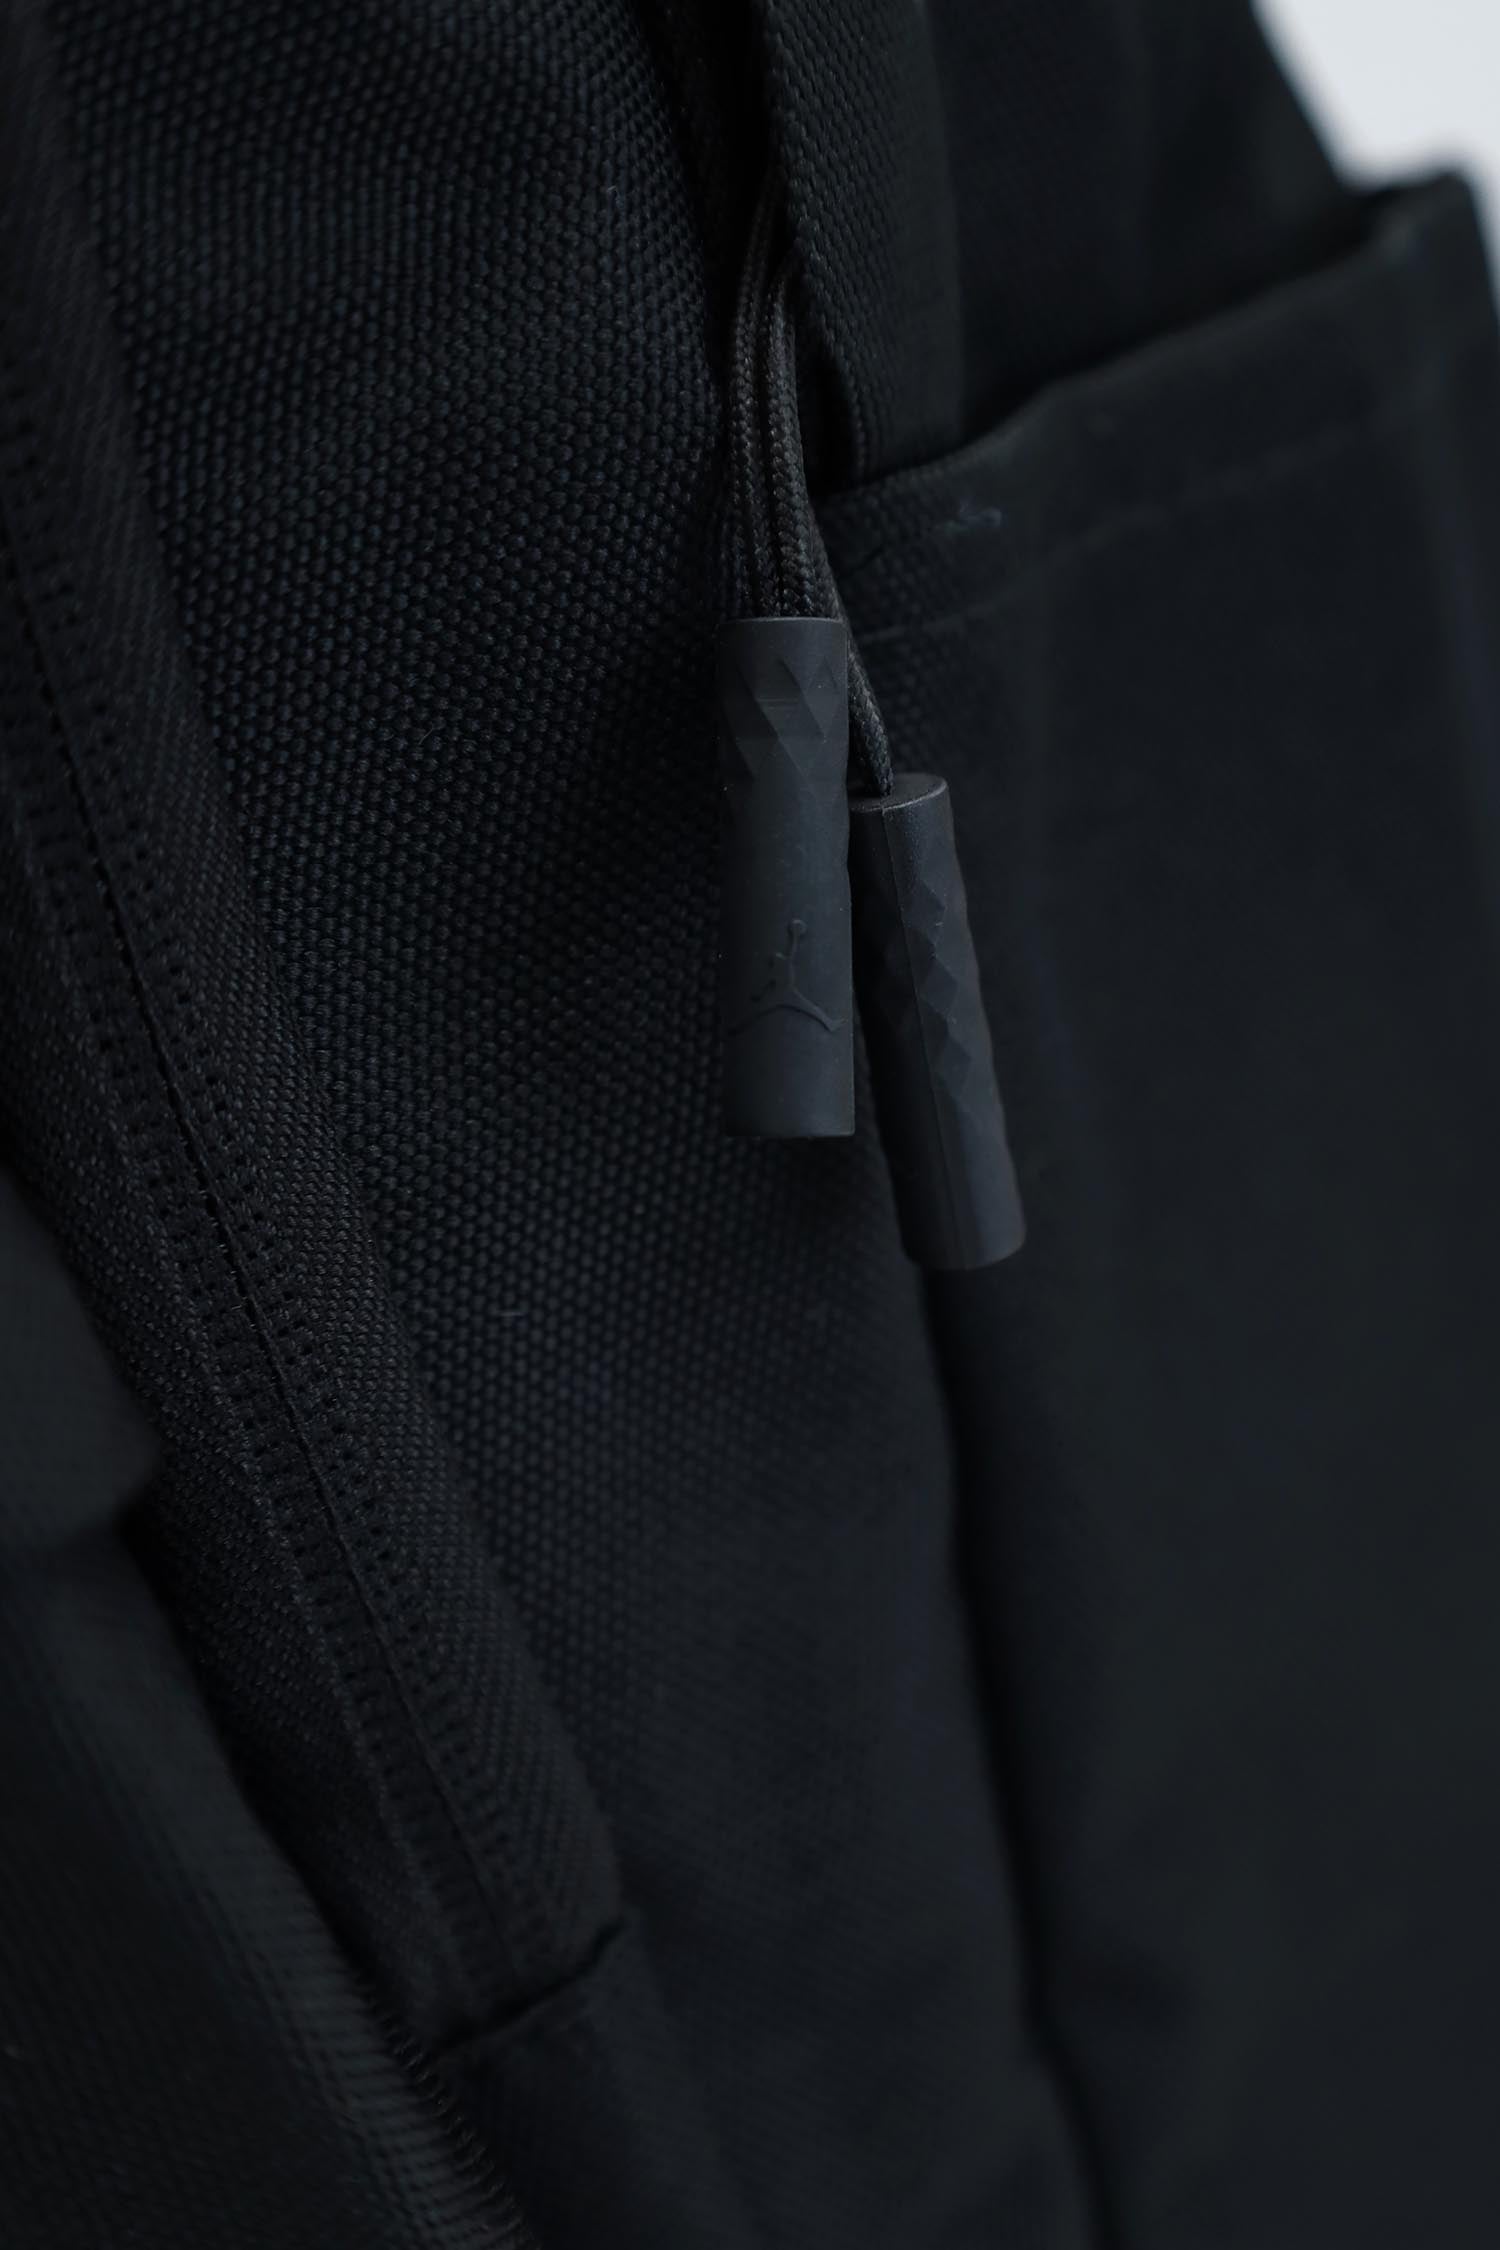 Jrdn Backpack In Black&White